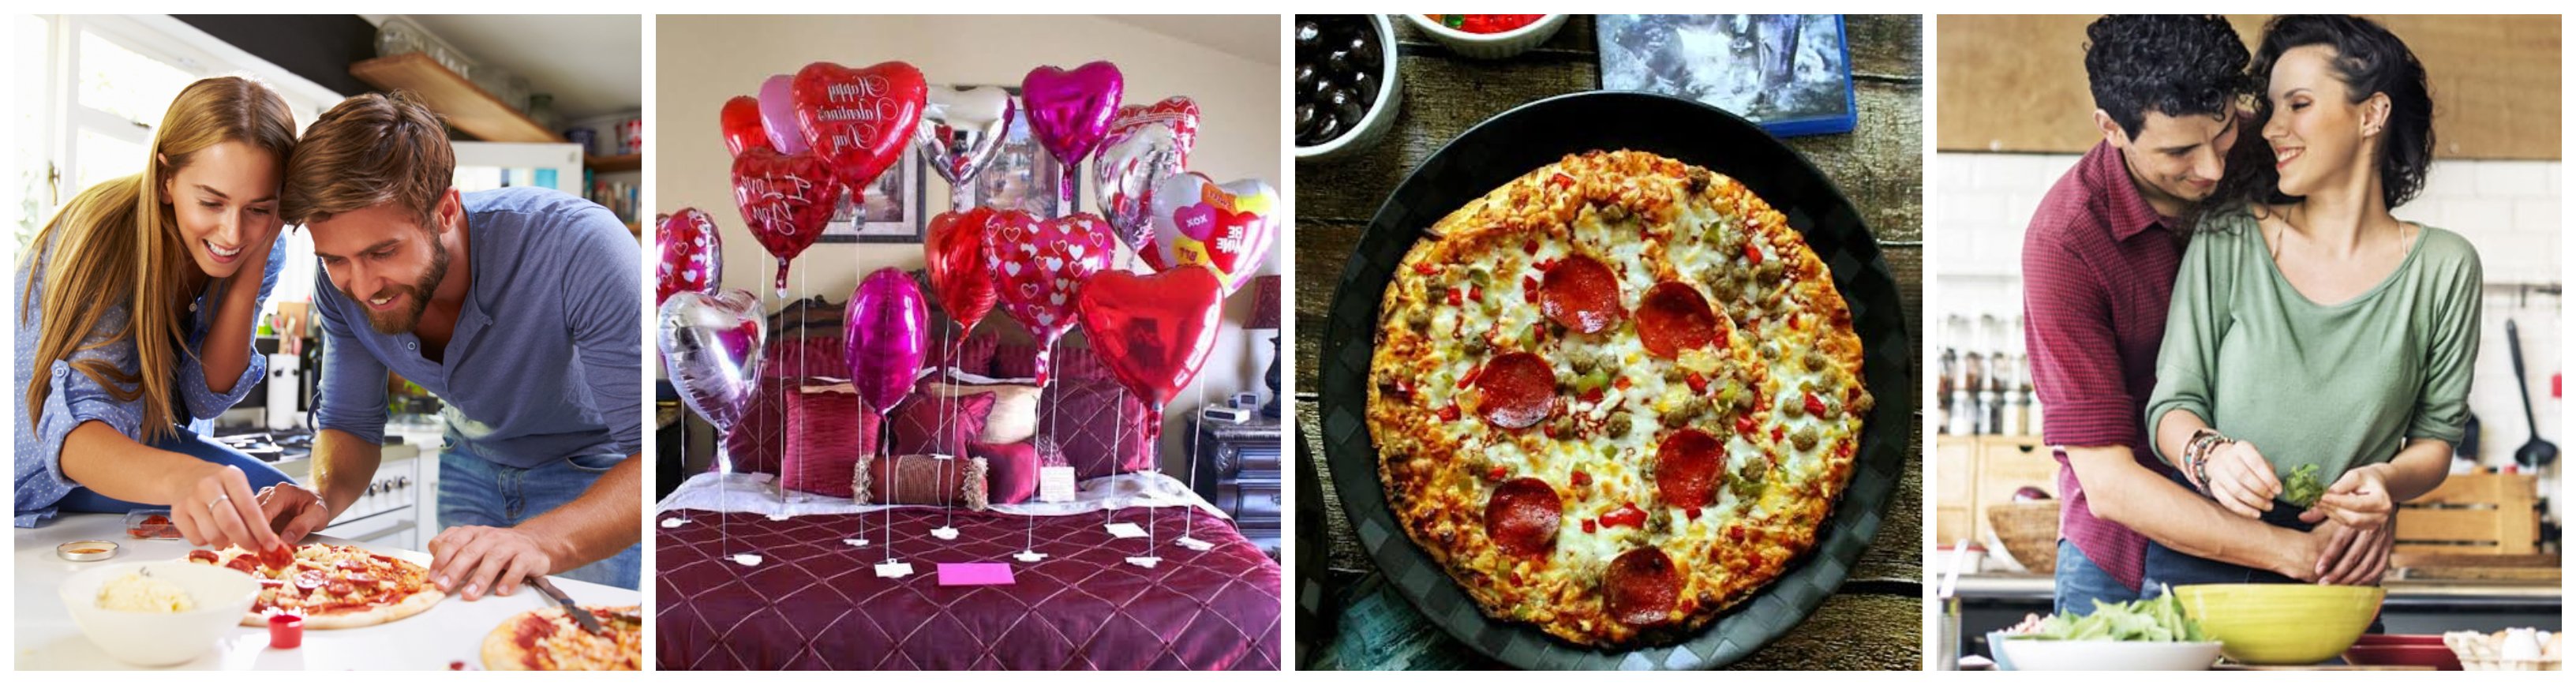 12 Best Last-Minute Valentine’s Day Date Ideas 2